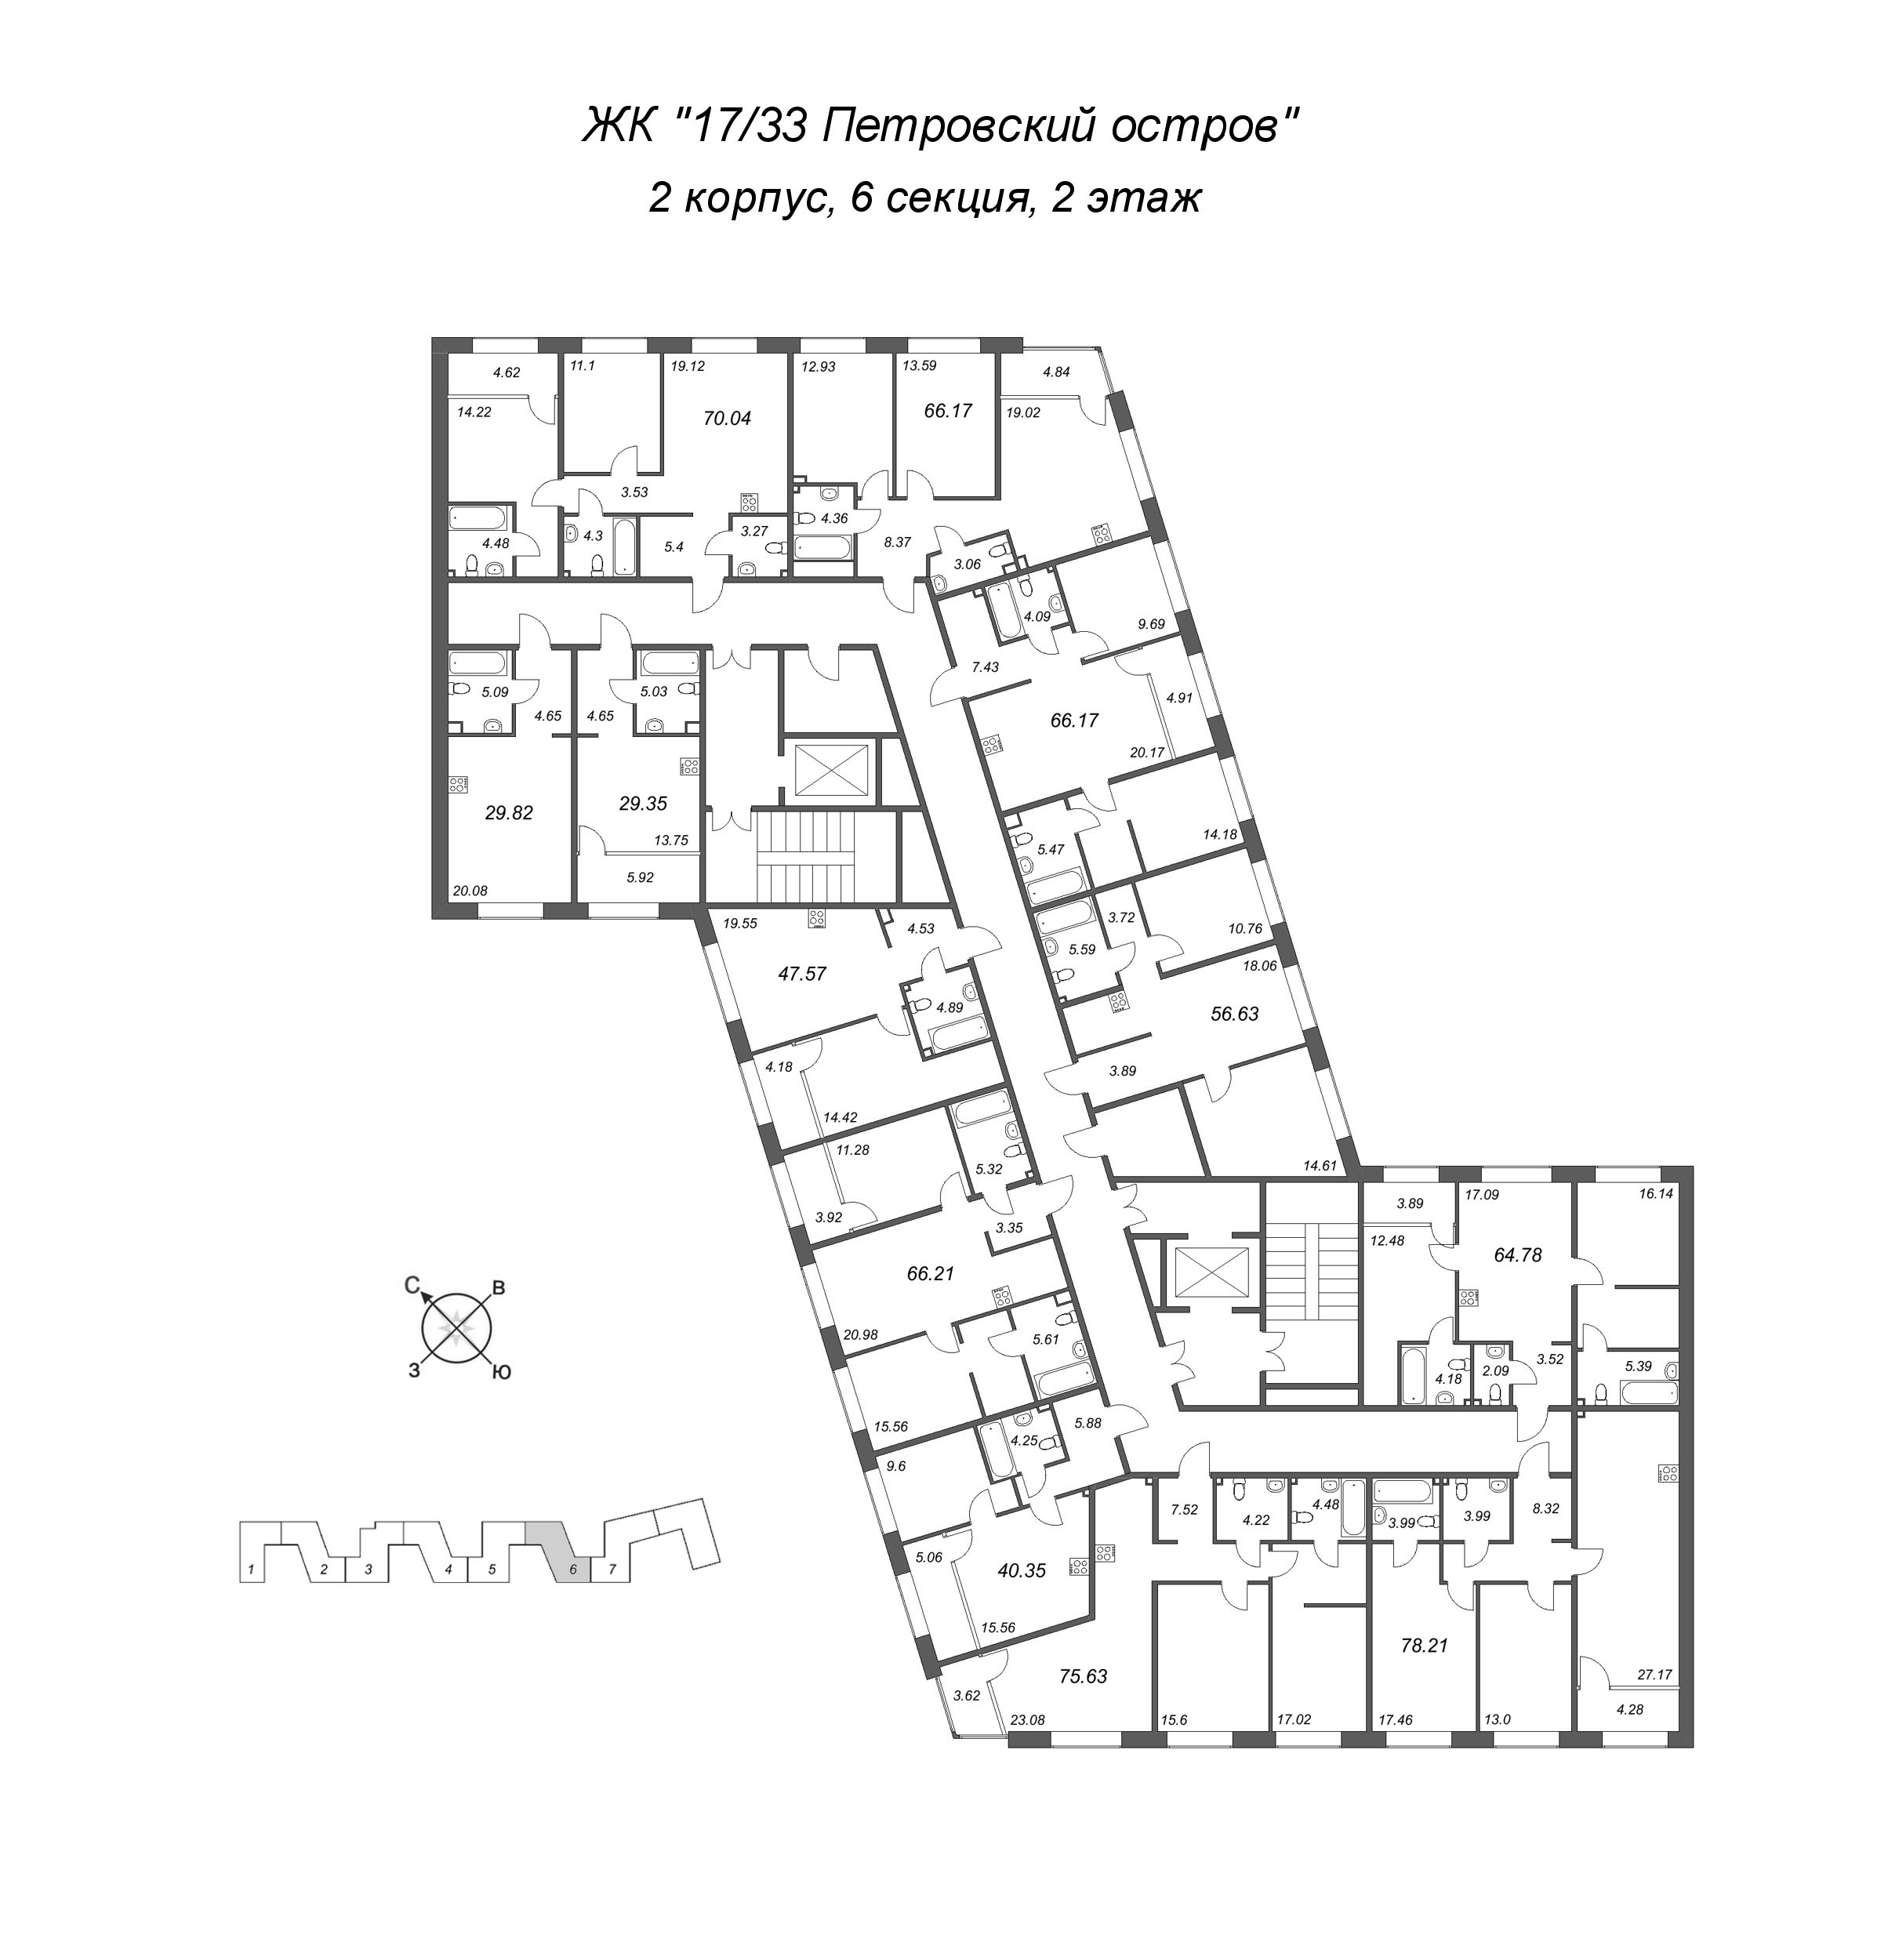 3-комнатная (Евро) квартира, 70.04 м² - планировка этажа